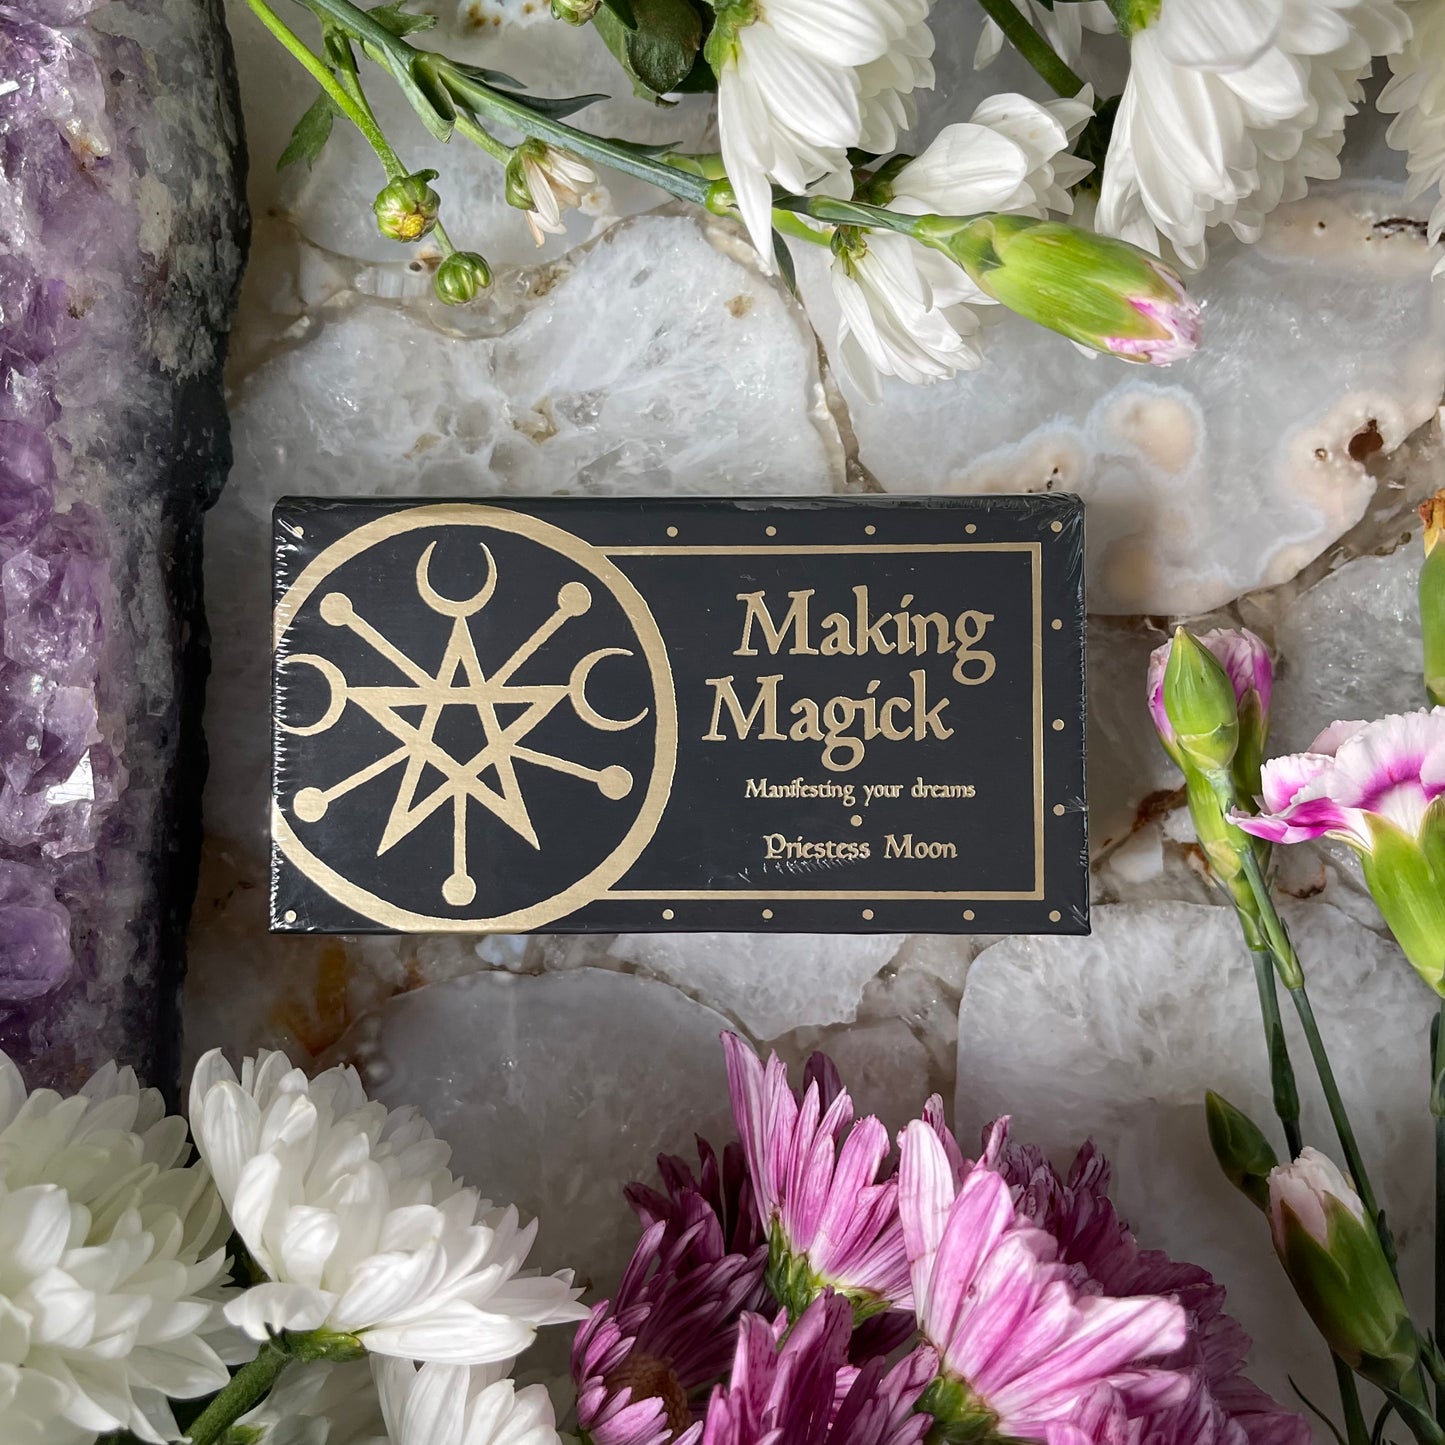 Making Magick Mini Cards